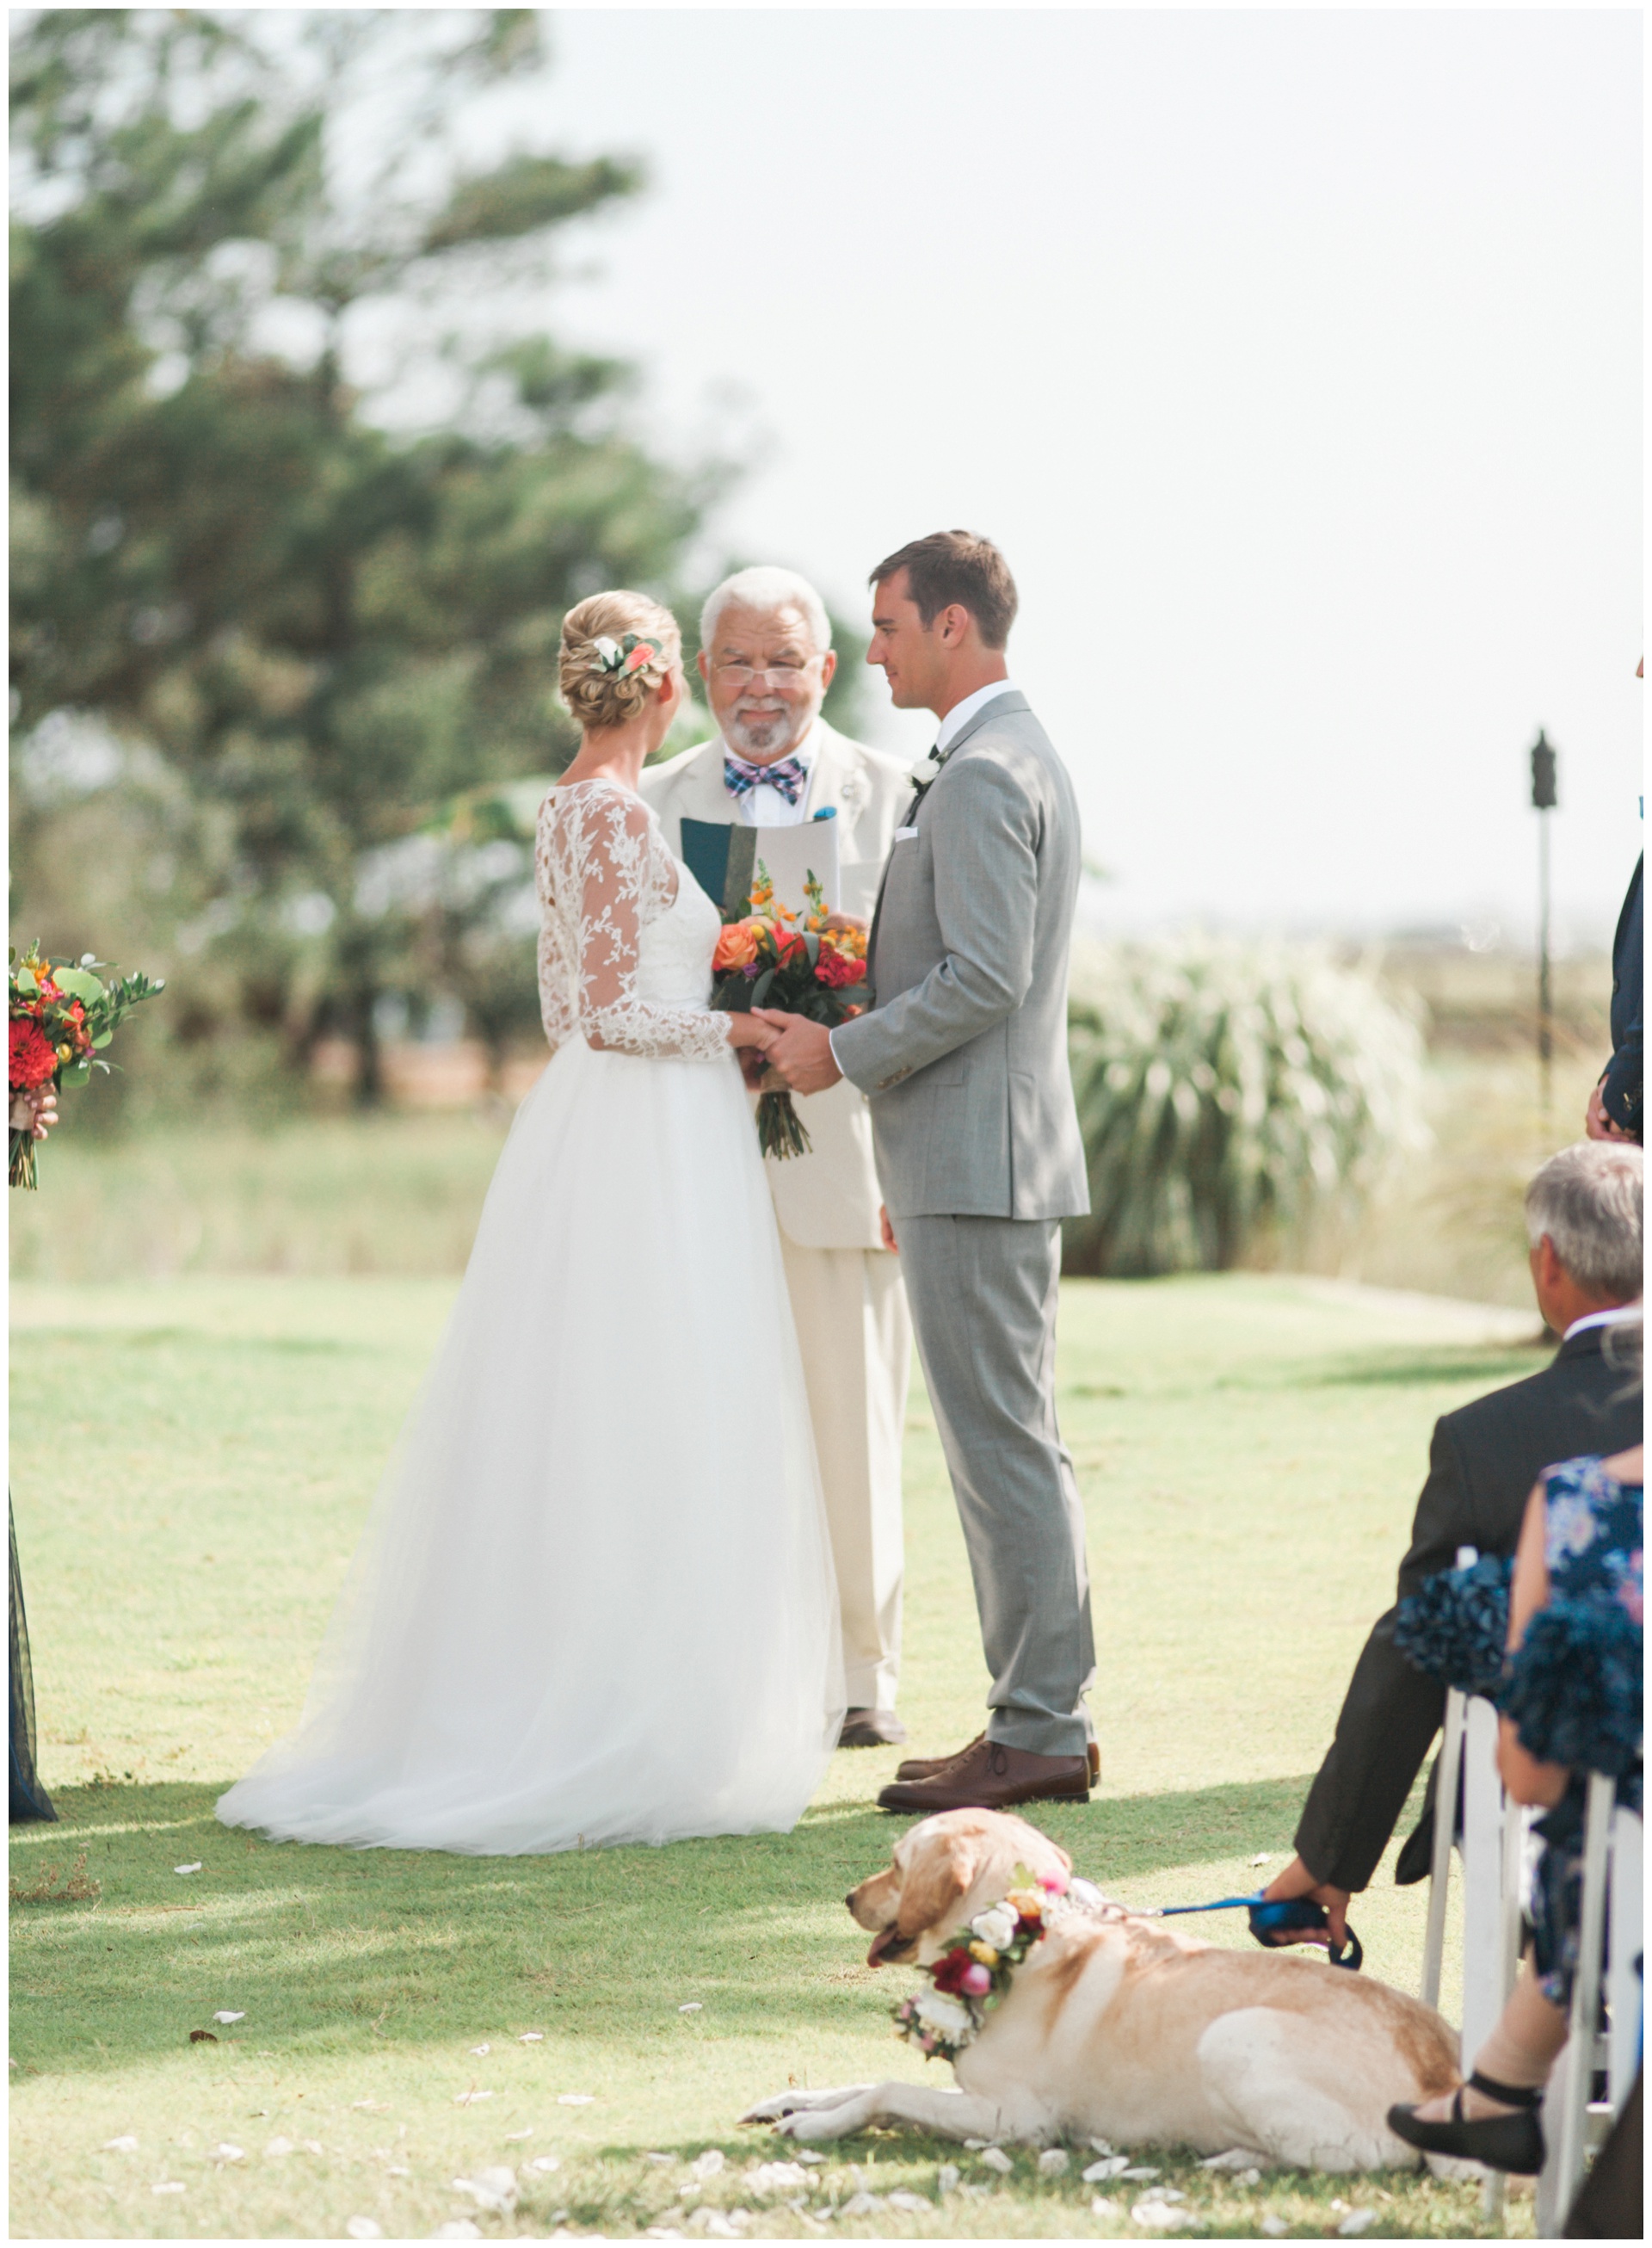 Bride and groom exchange vows on the lawn at their Regatta Inn Wedding